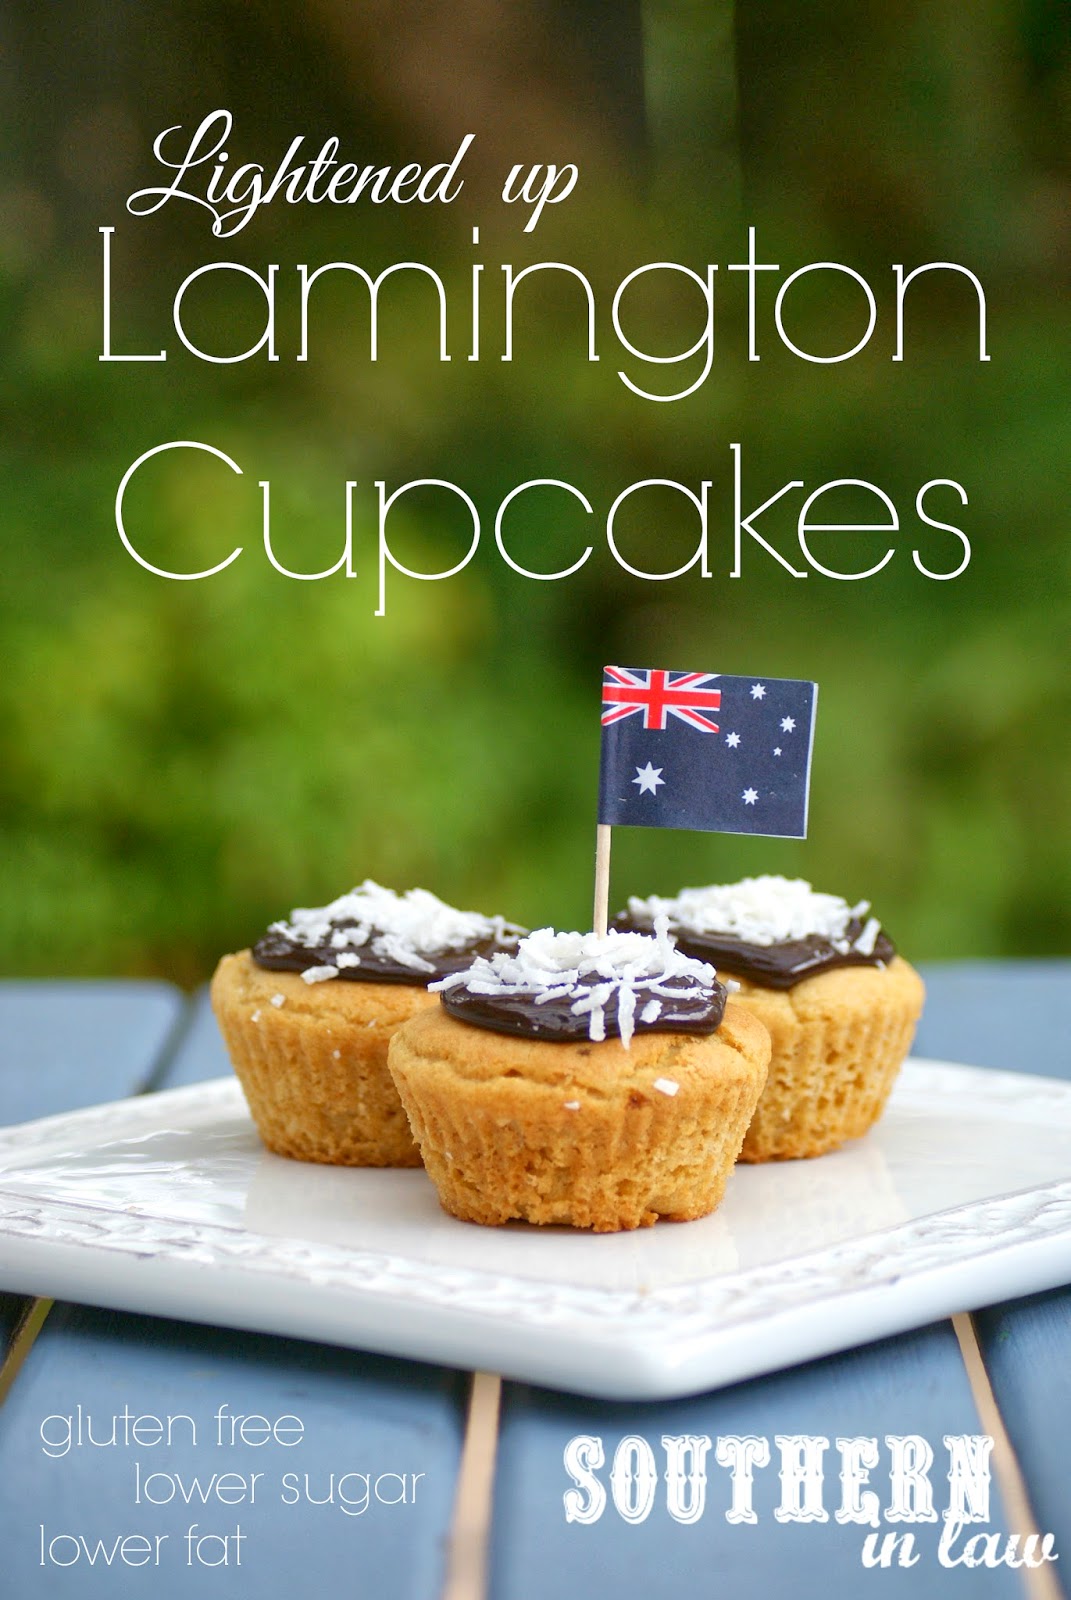 Lightened Up Lamington Cupcakes - Low Fat Butter Cake Recipe - Gluten Free, Low Sugar